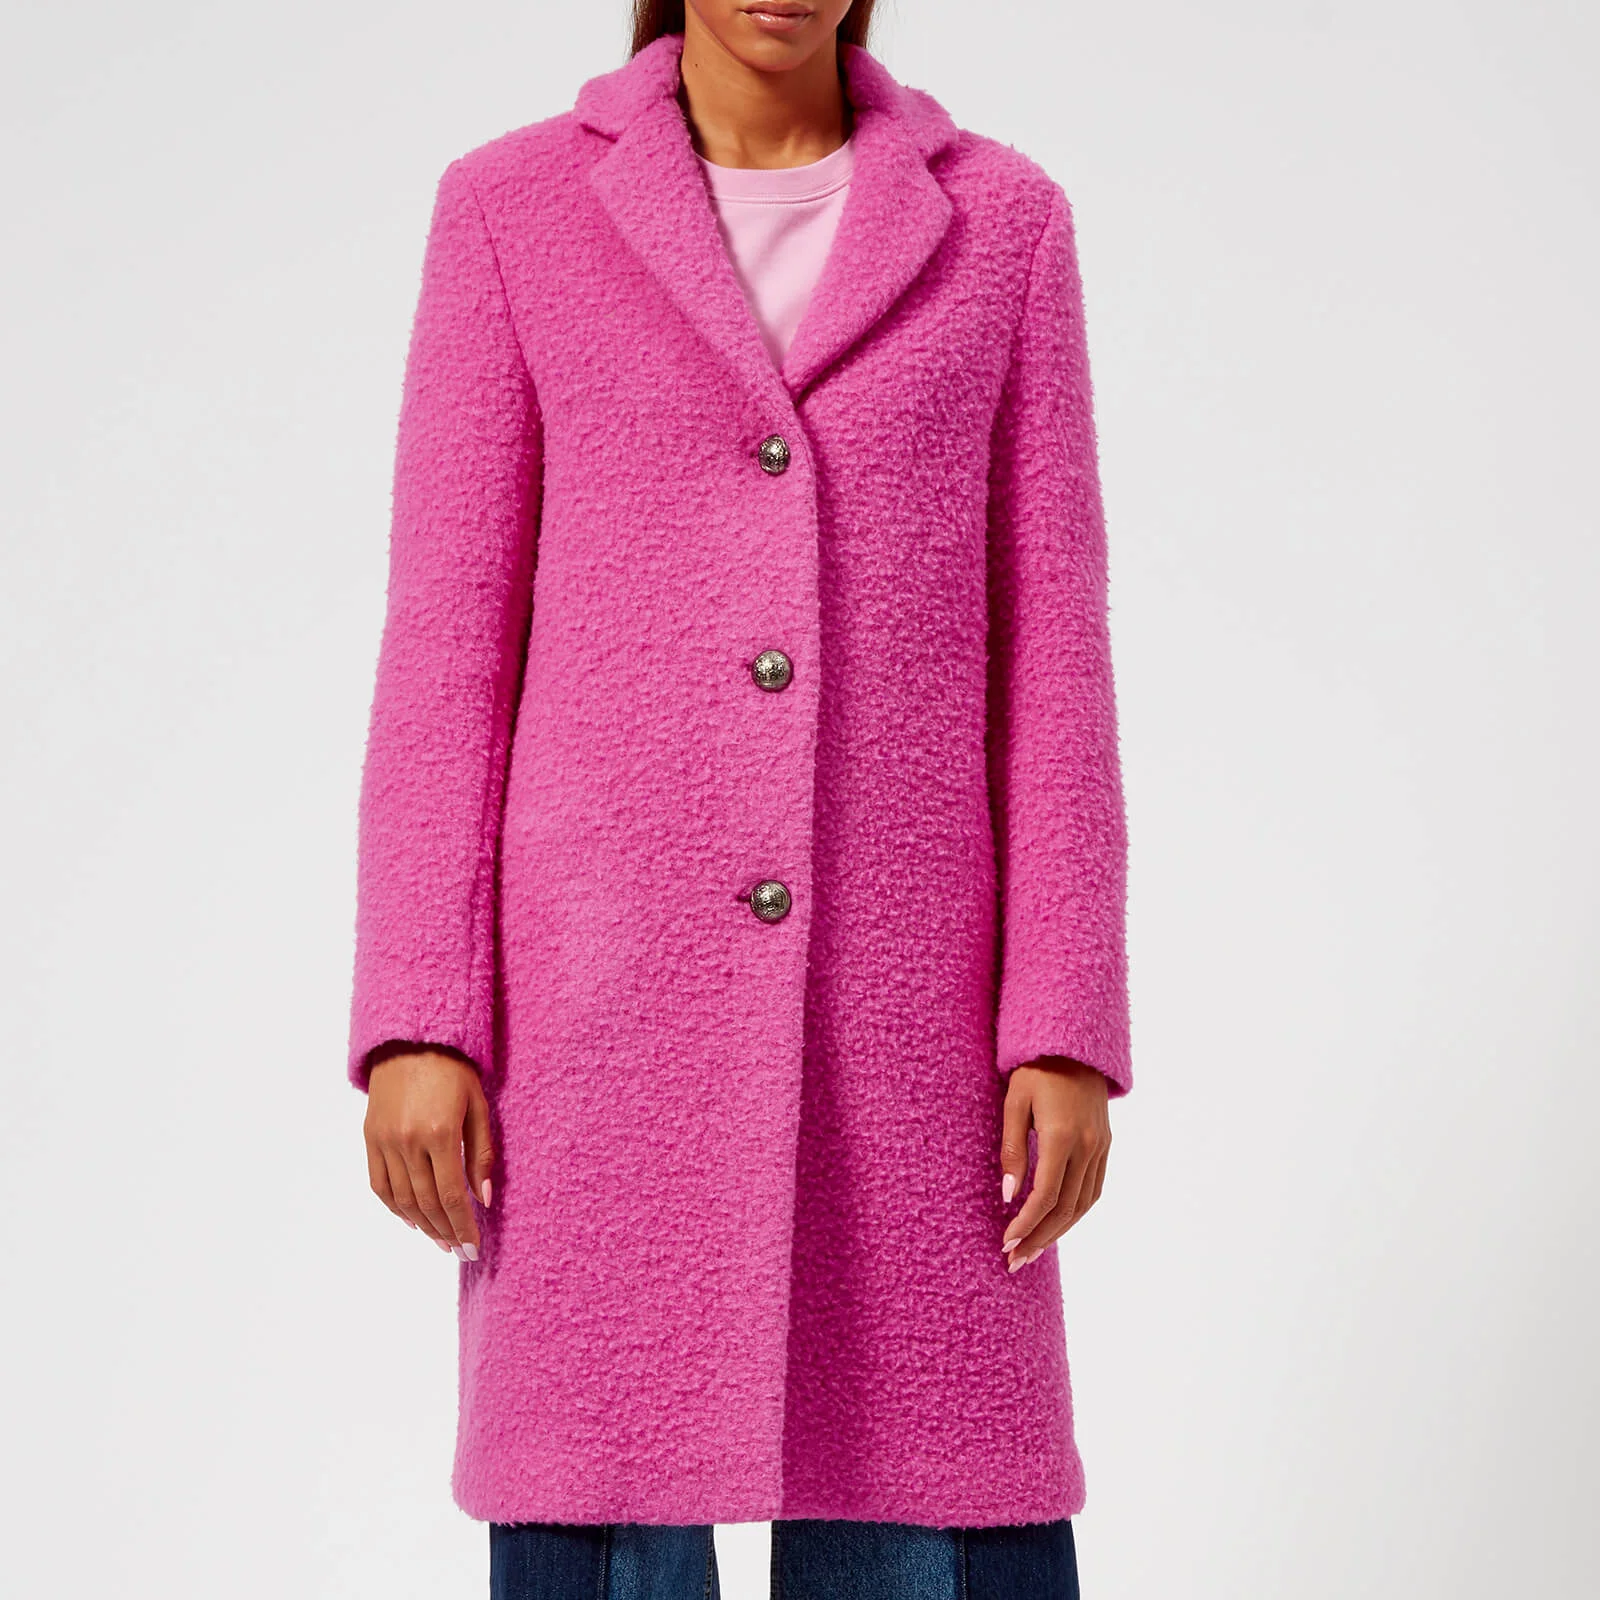 MSGM Women's Smart Textured Coat - Pink Image 1